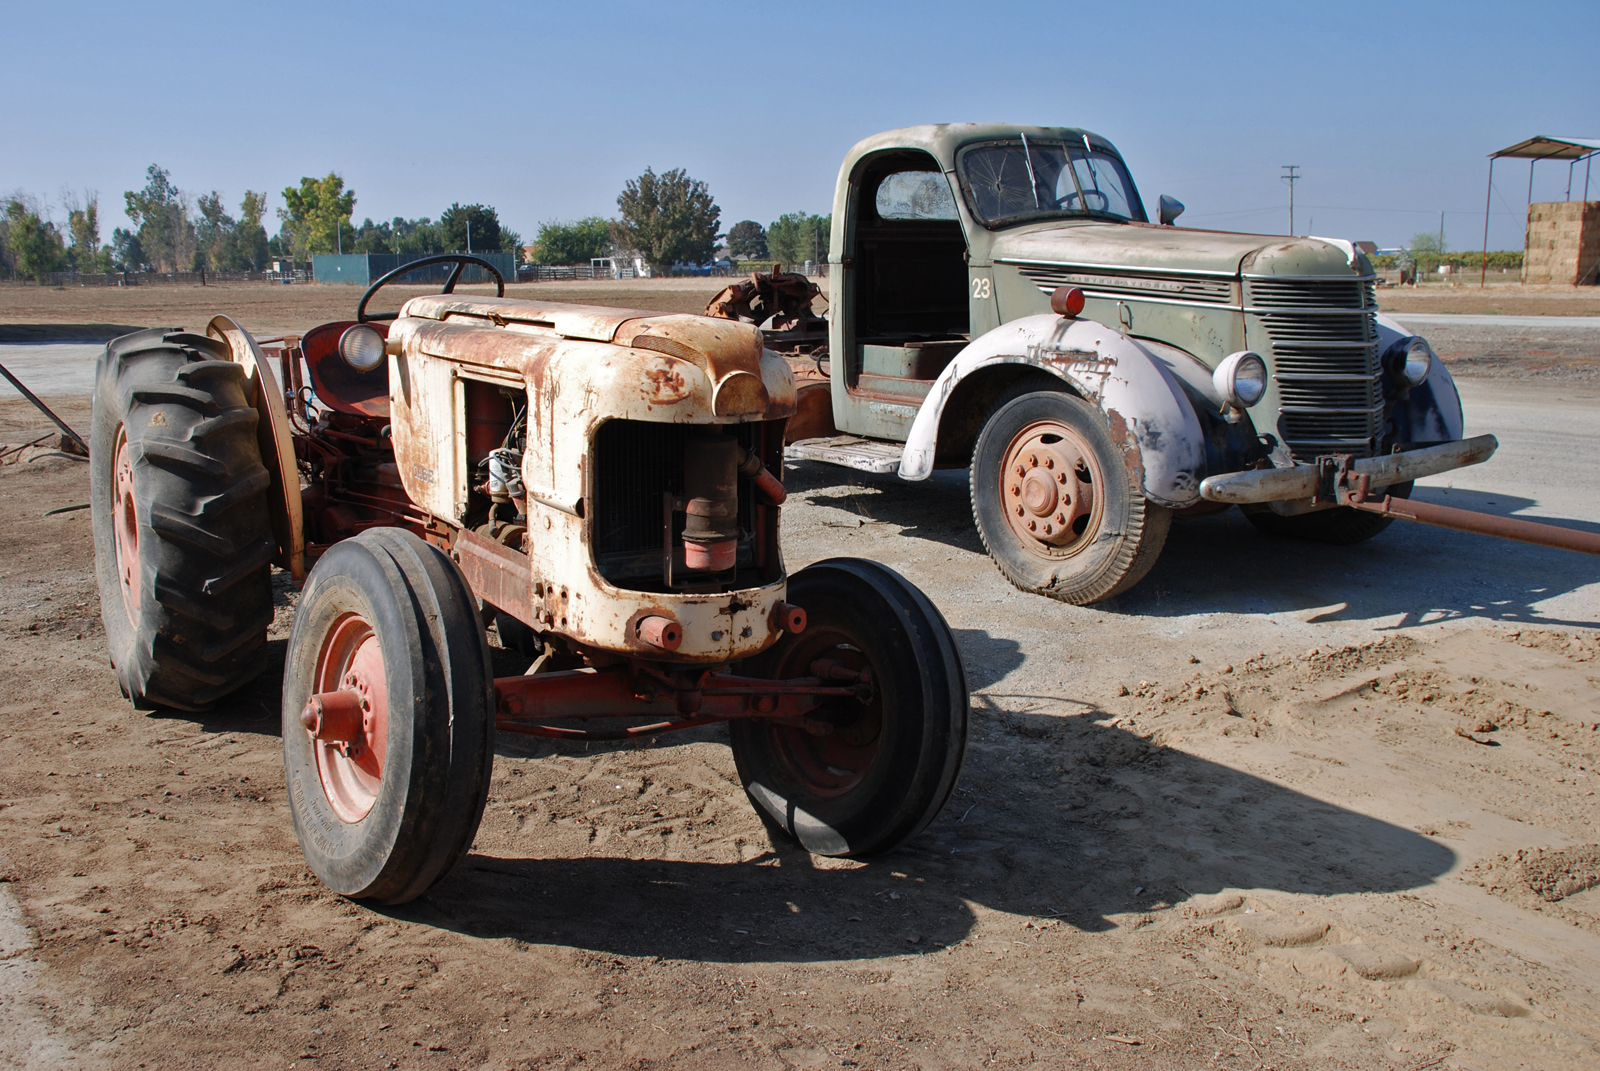 Old Friends Laid to Rest, Ancient, Automobile, Bspo06, Farming, HQ Photo